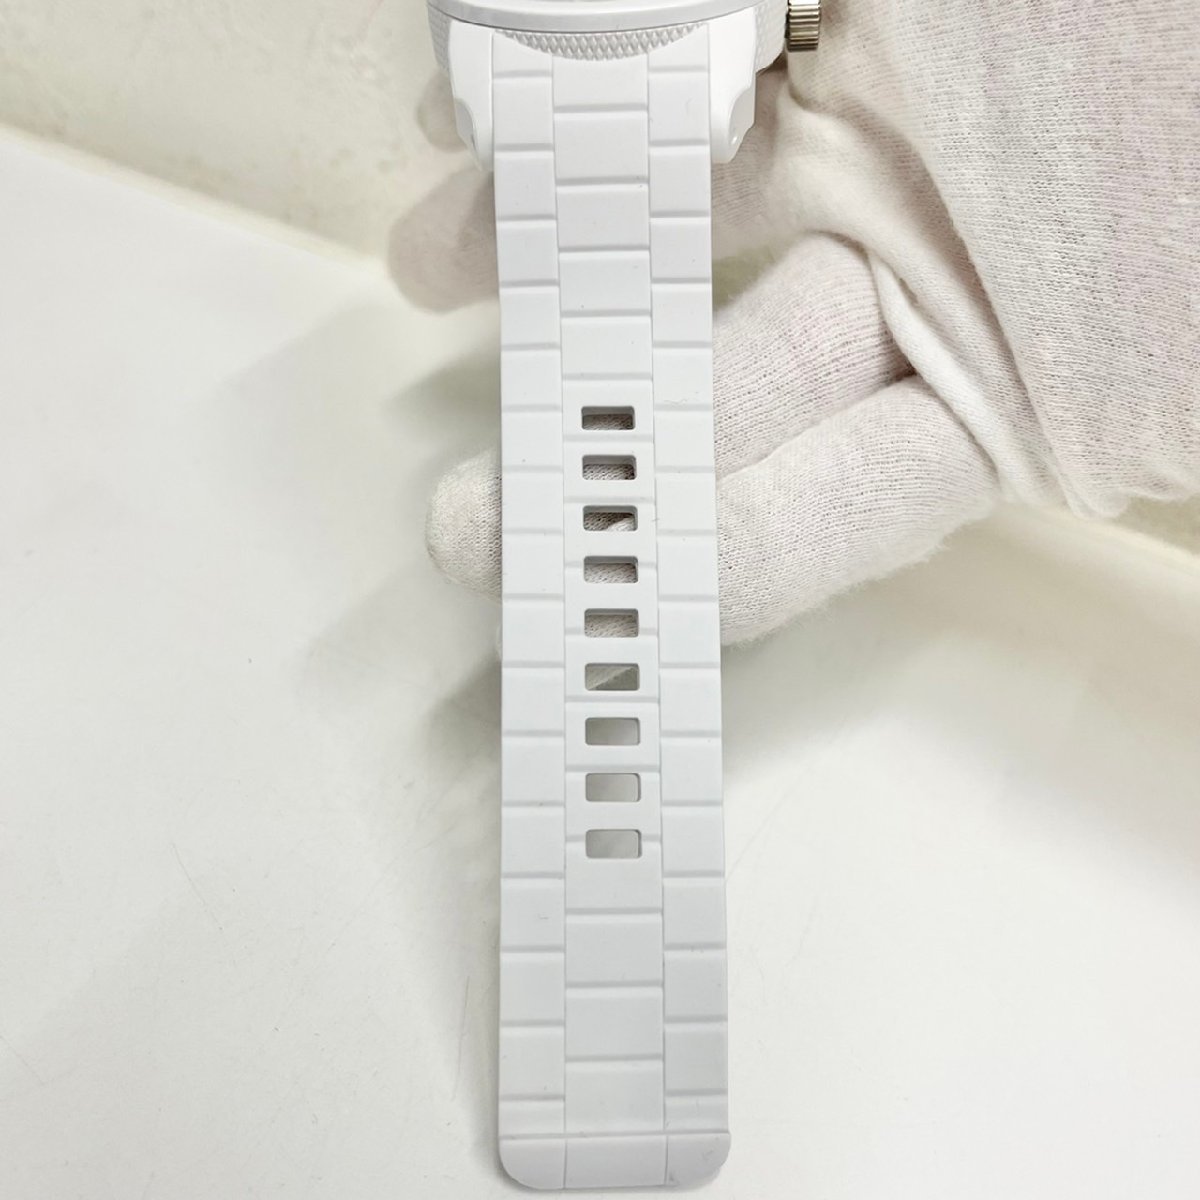 DIESEL ディーゼル 腕時計 DZ-1436 未使用 ホワイト 白 動作確認済み アナログ クォーツ 3針 電池式 白文字盤 メンズ 男性用 箱付き (I)_画像8